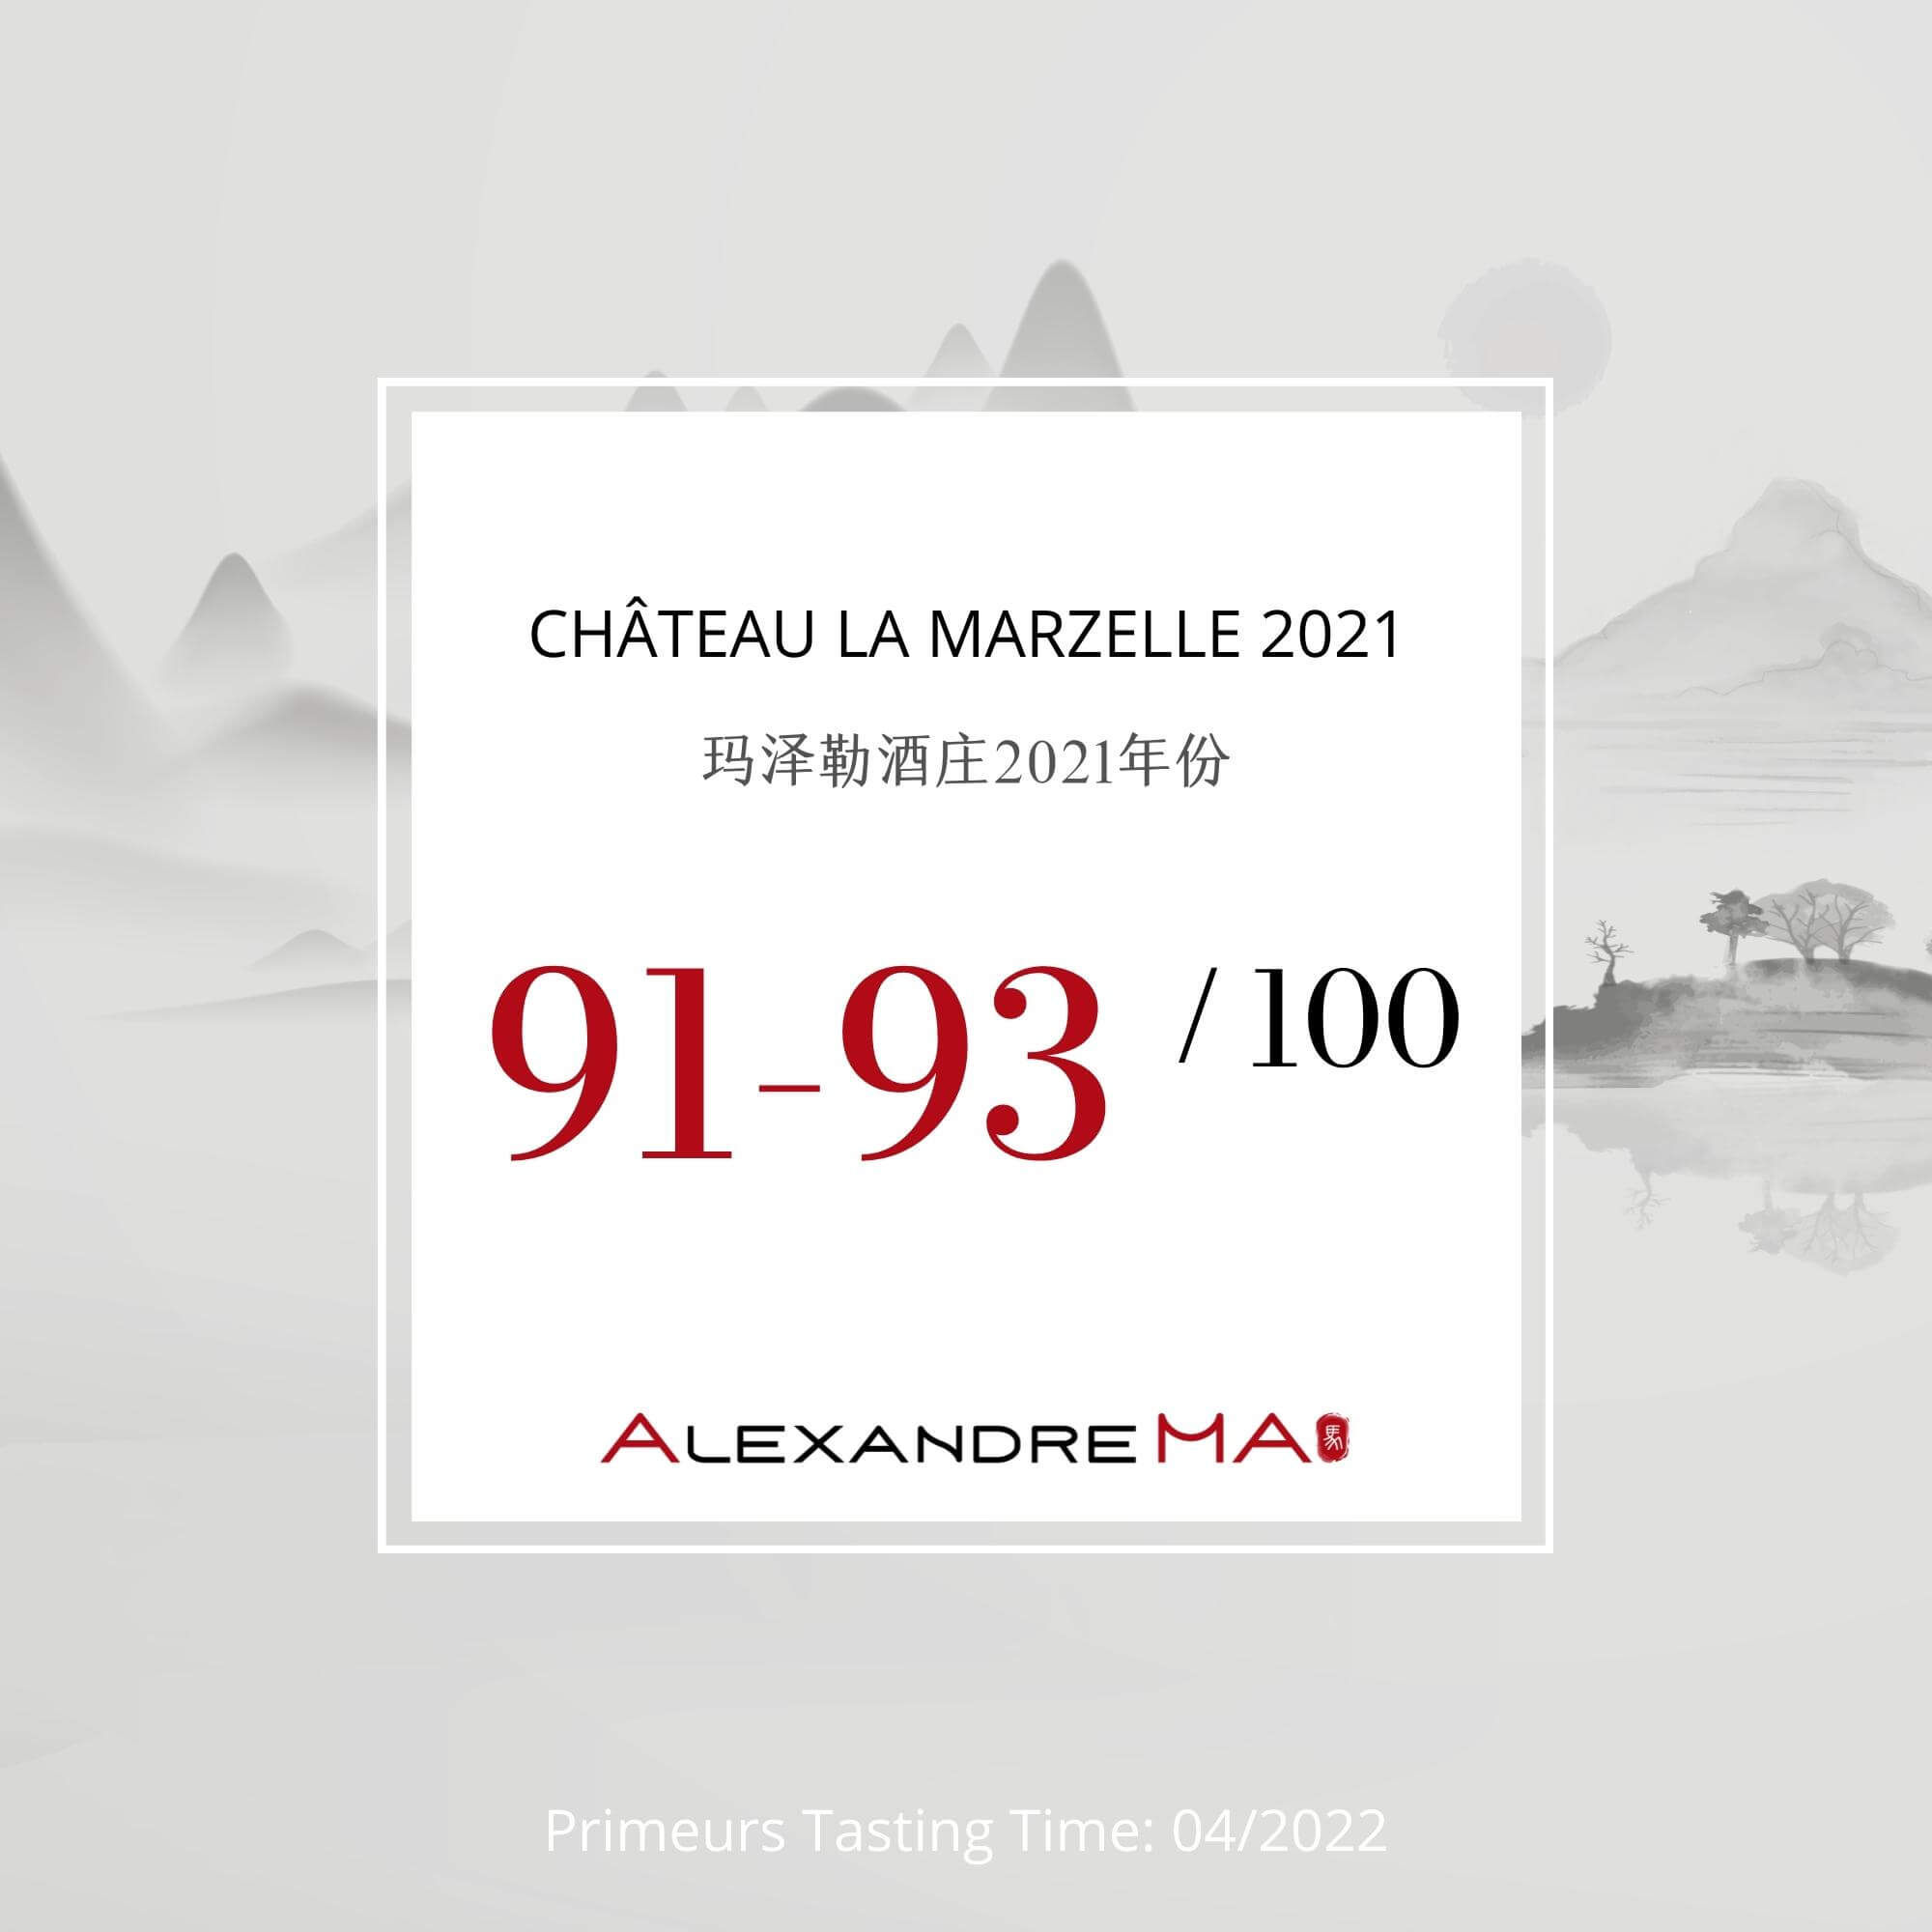 Château La Marzelle 2021 - Alexandre MA